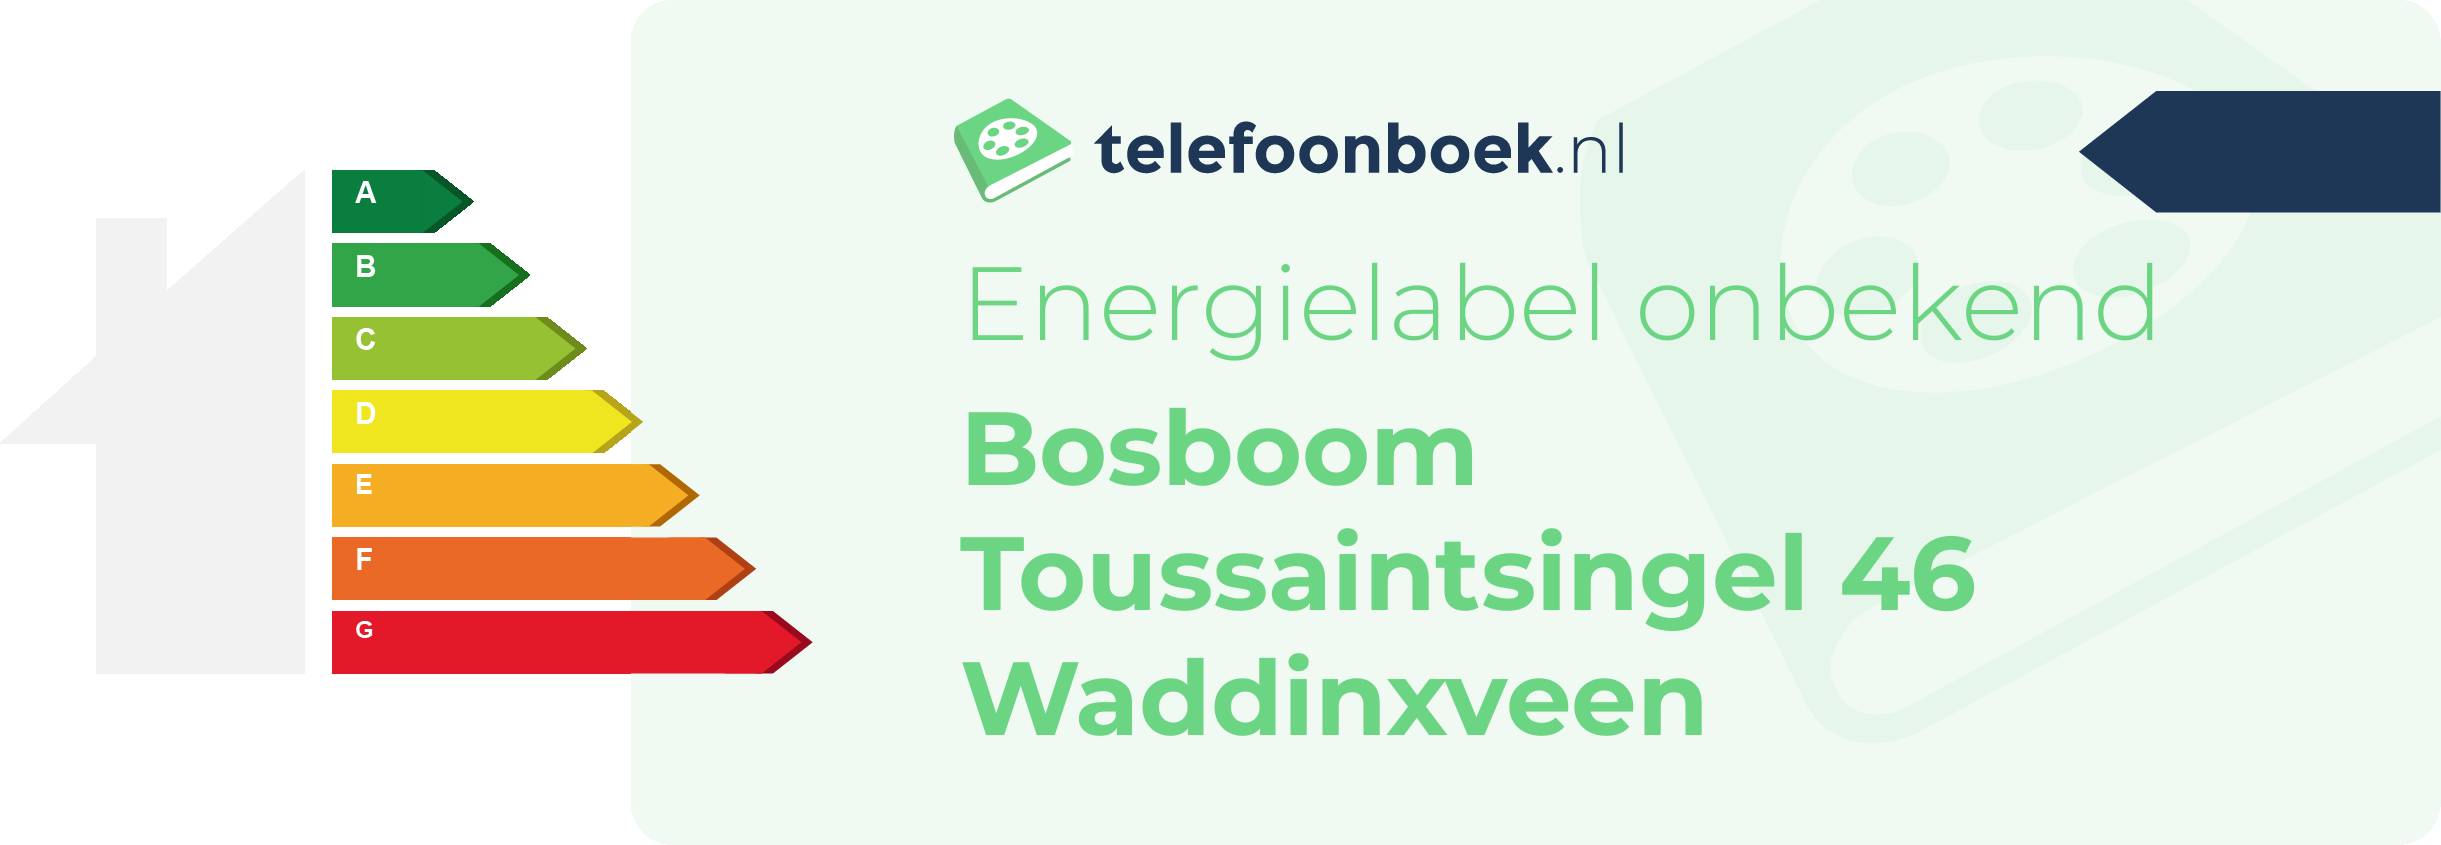 Energielabel Bosboom Toussaintsingel 46 Waddinxveen